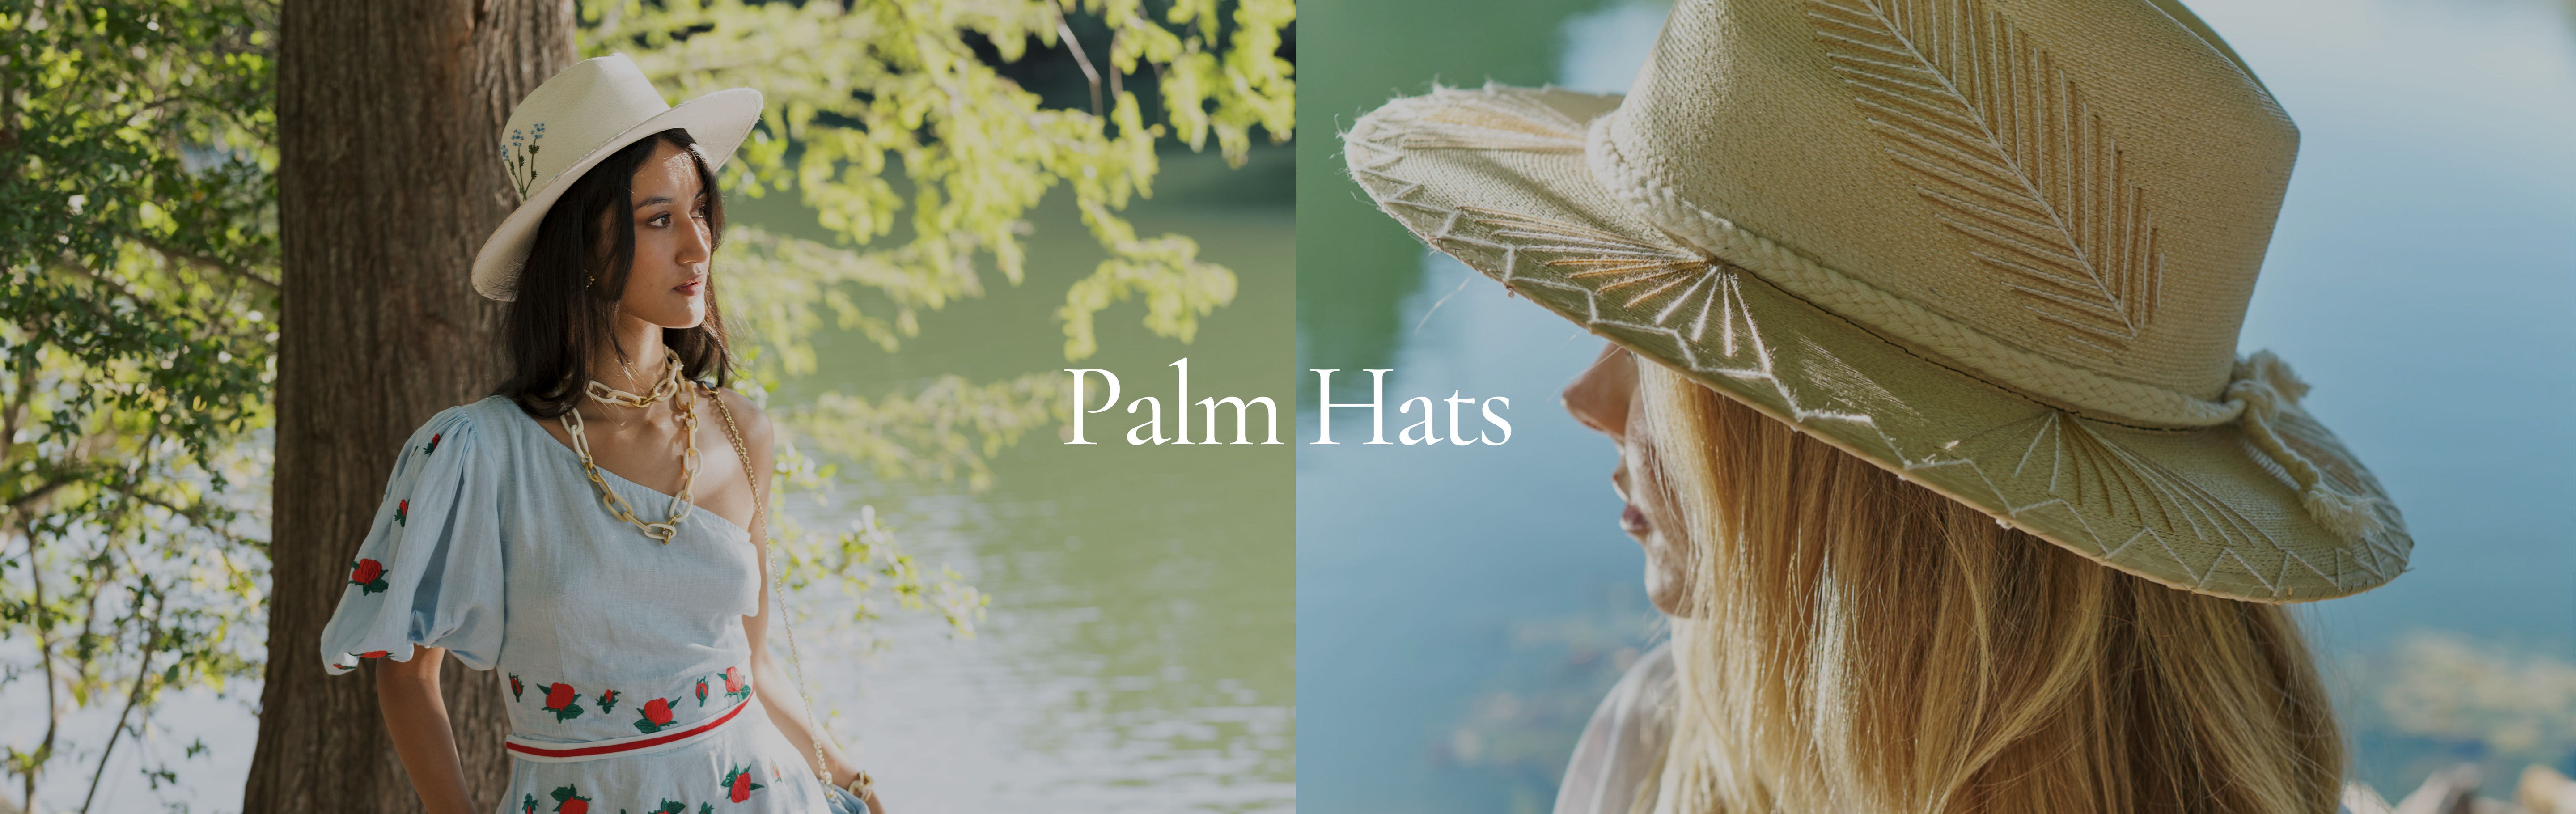 Palm Hats